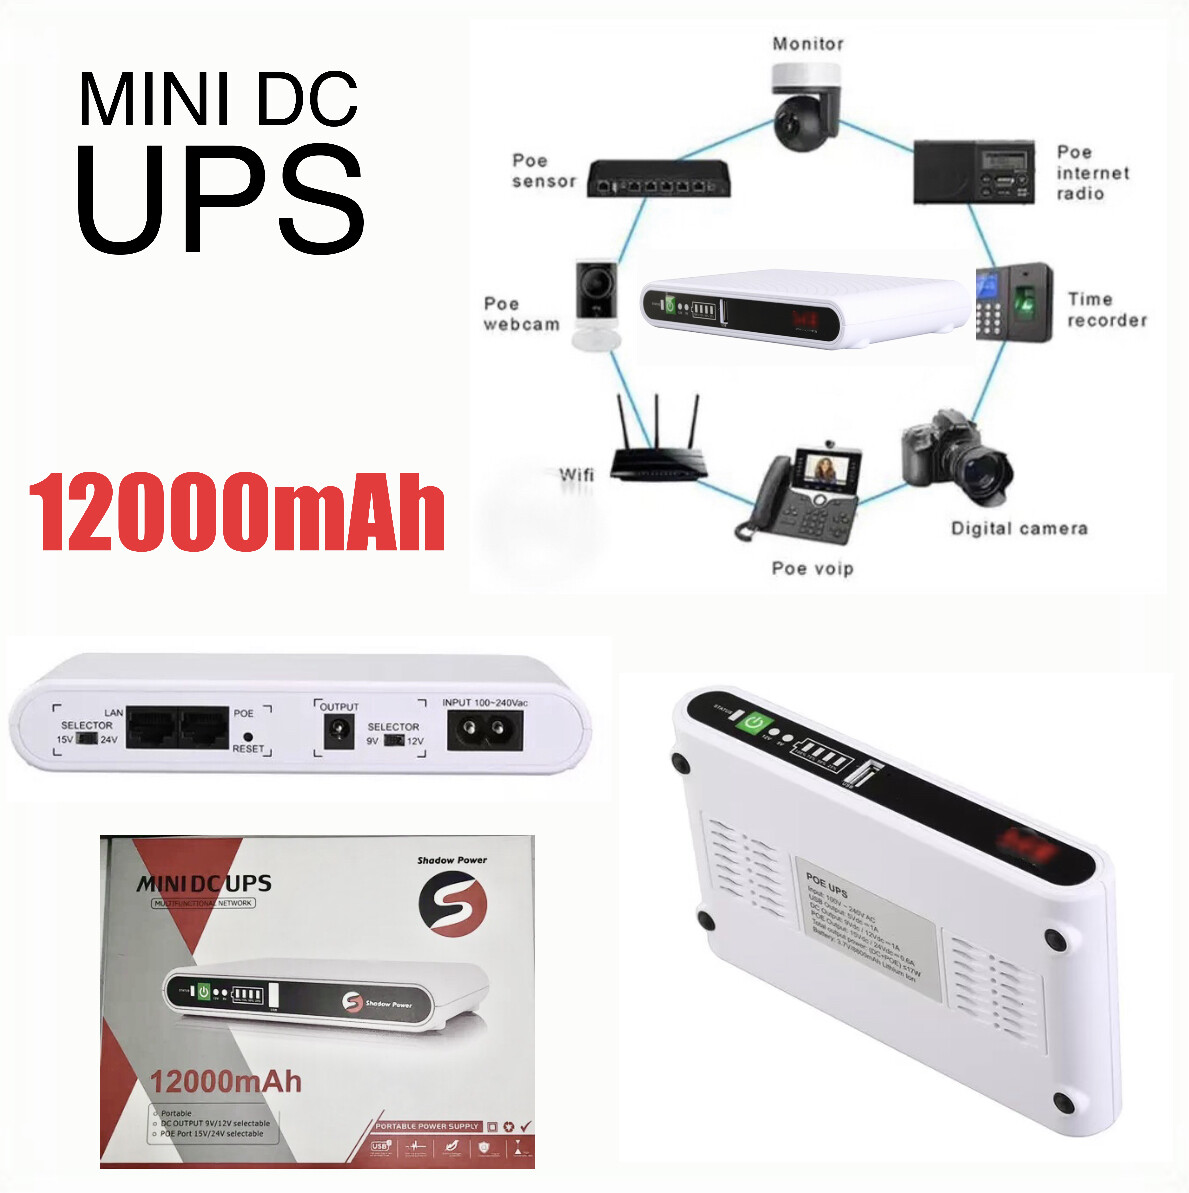 Mini DC UPS